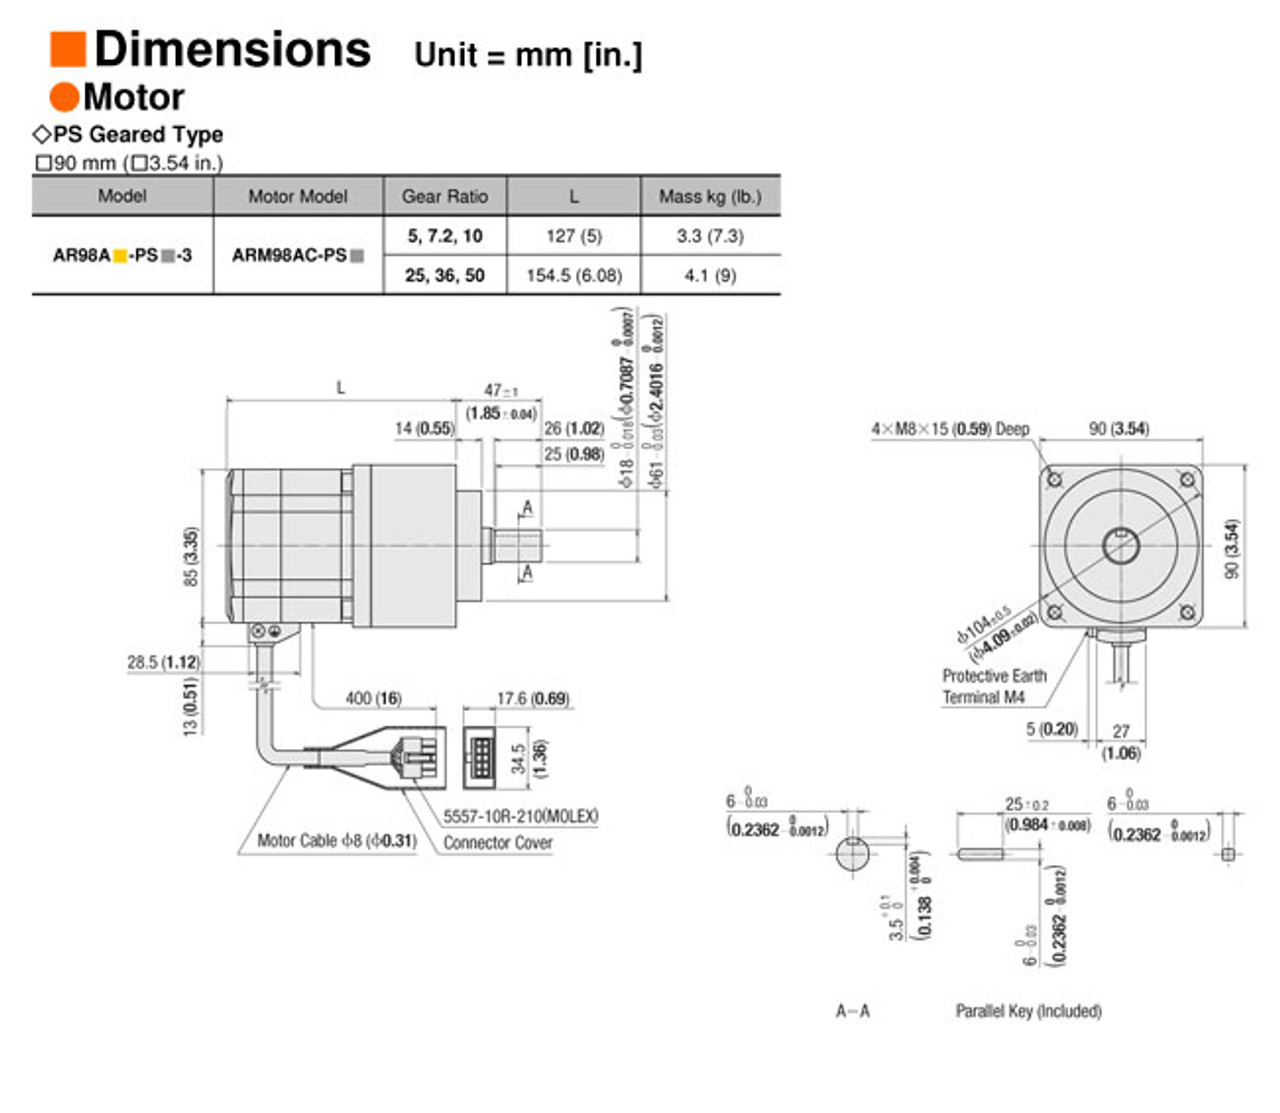 AR98AC-PS25-3 - Dimensions